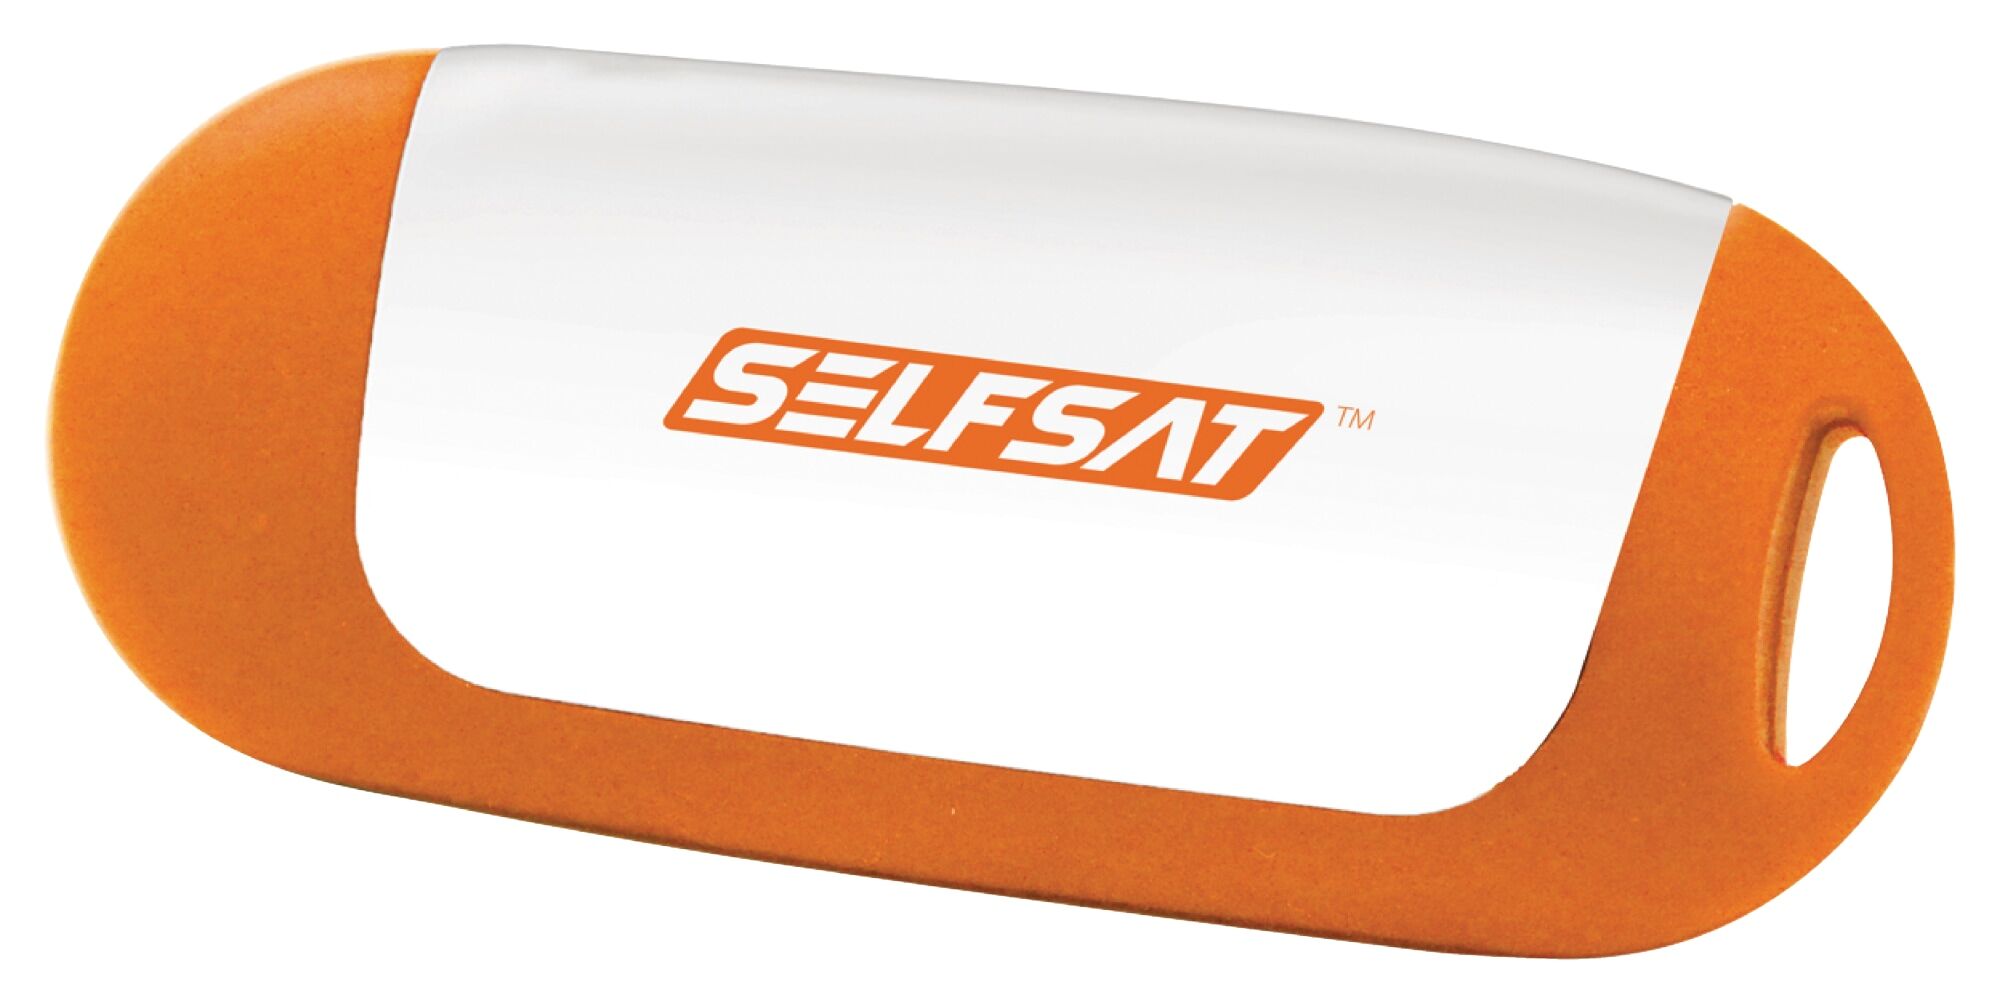 Selfsat SAT IP Wi-Fi Dongle